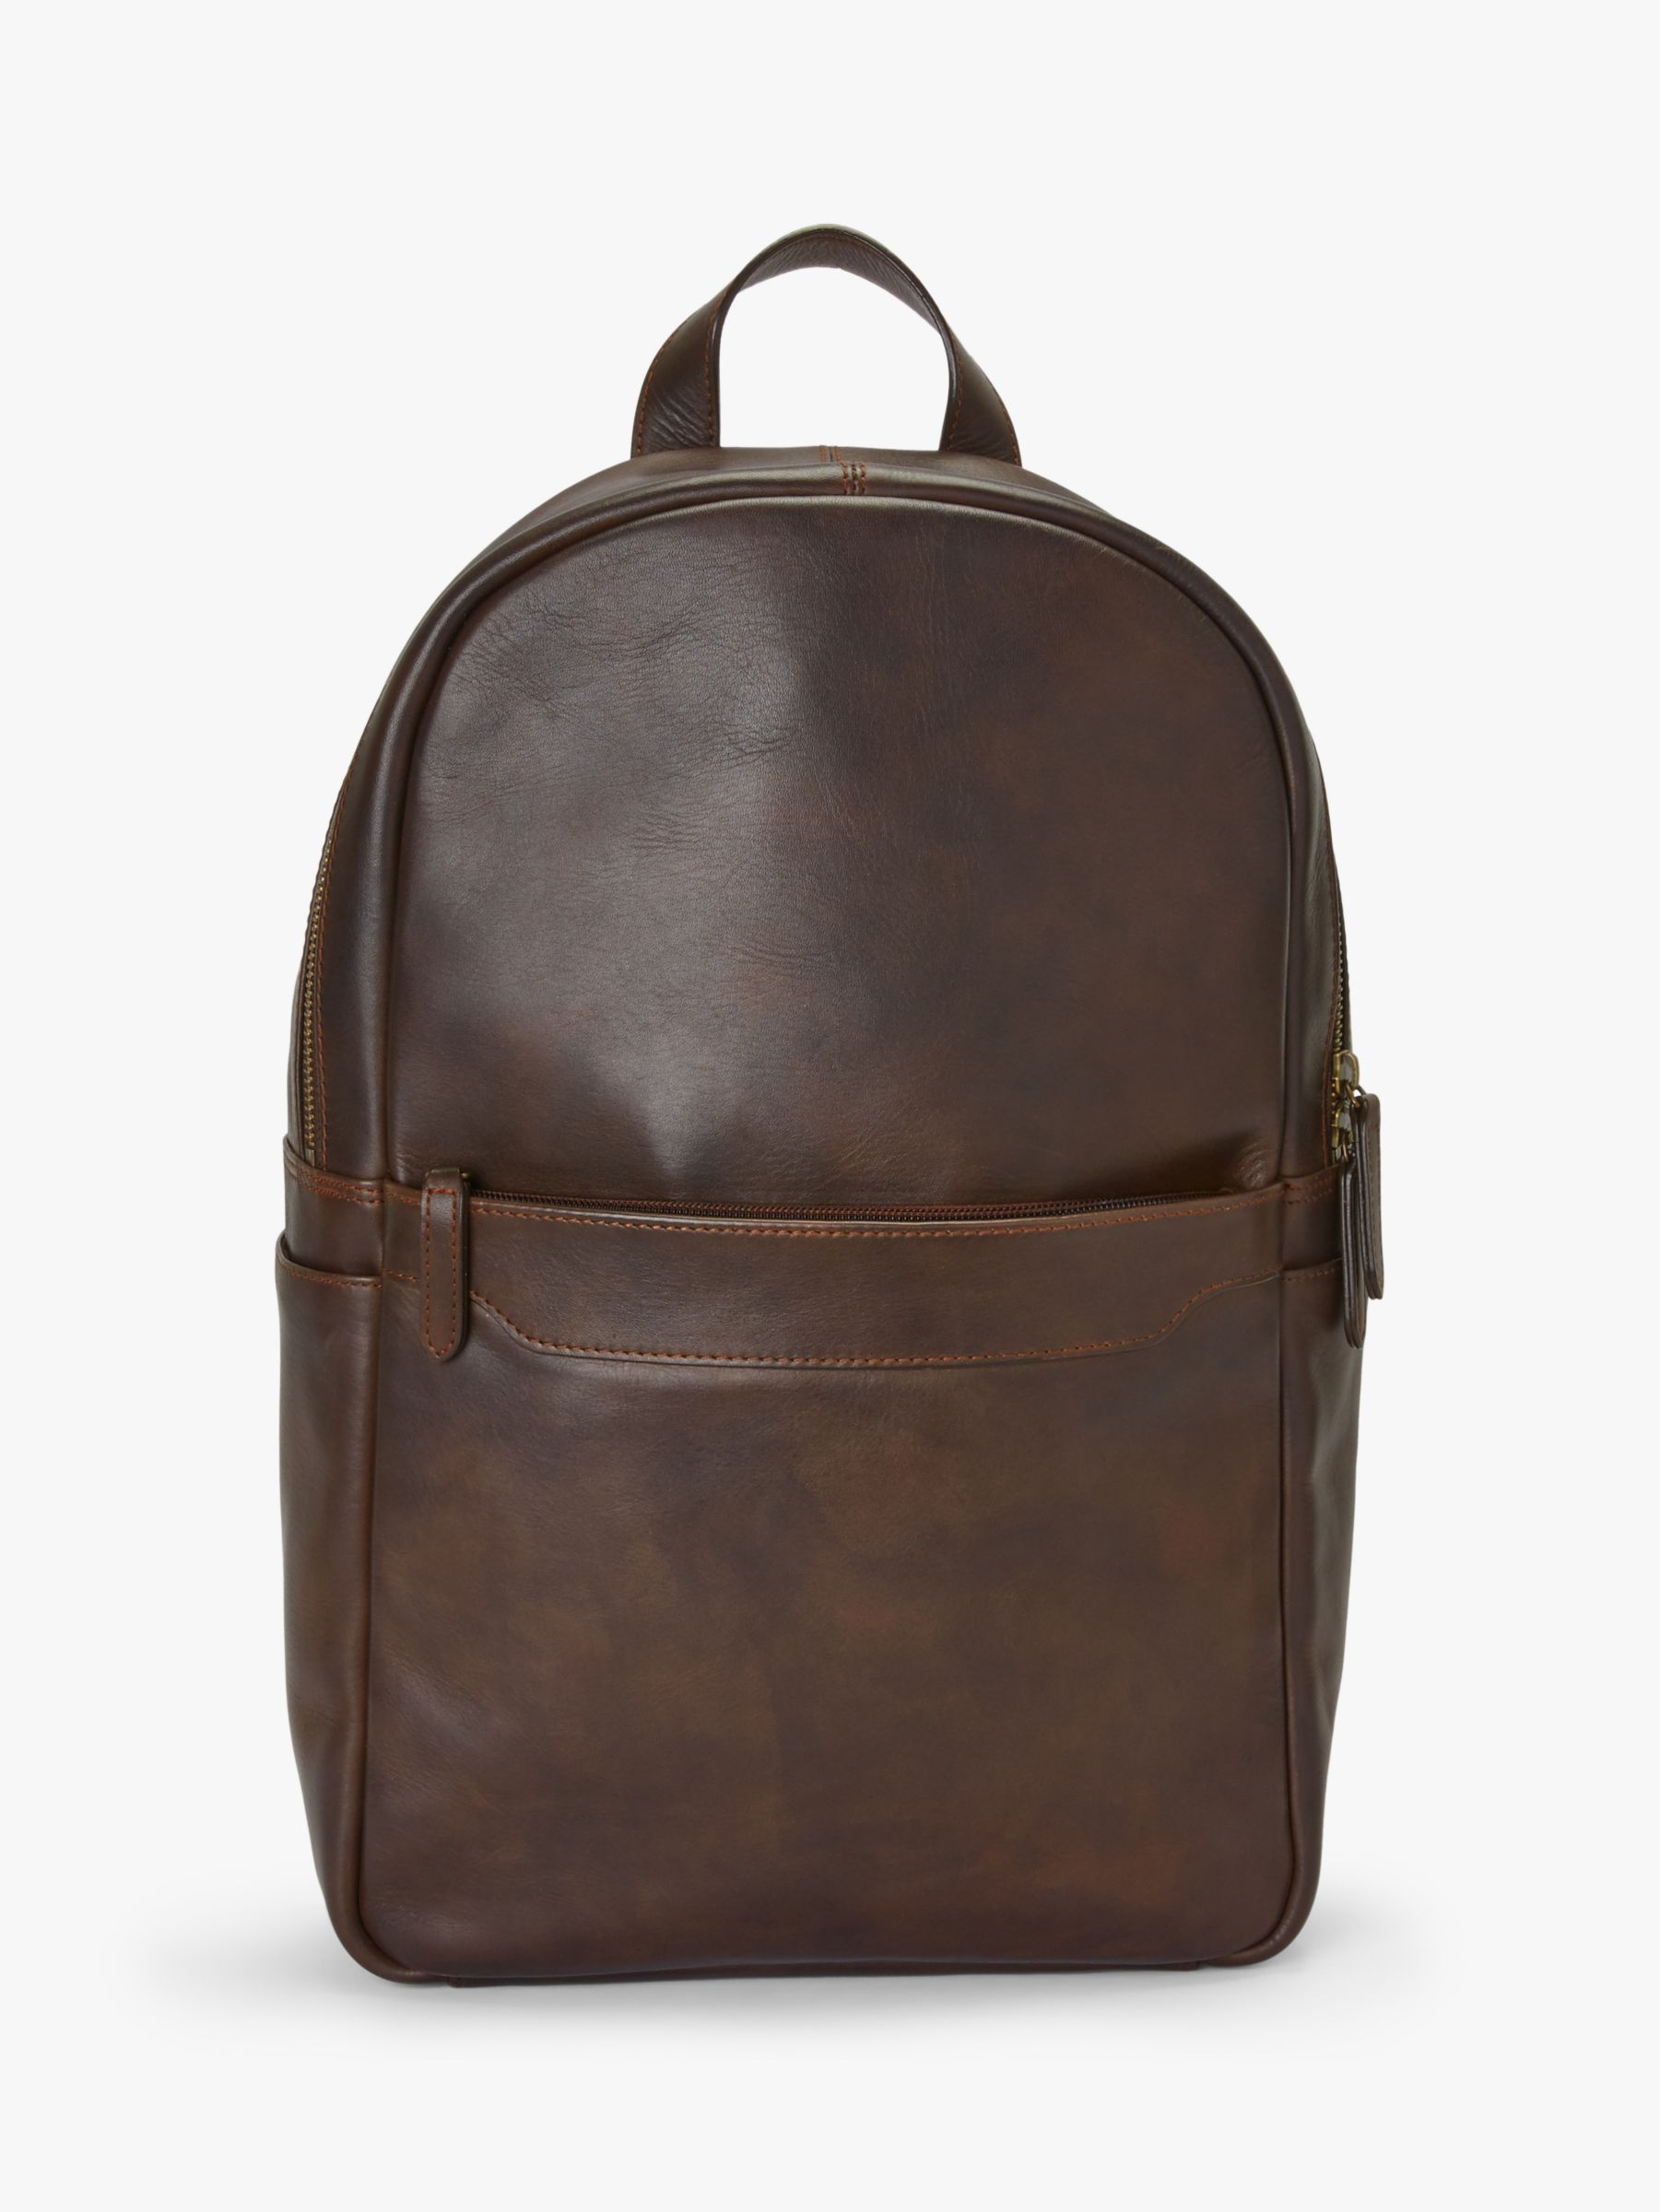 John Lewis & Partners Edinburgh Leather Backpack, Brown